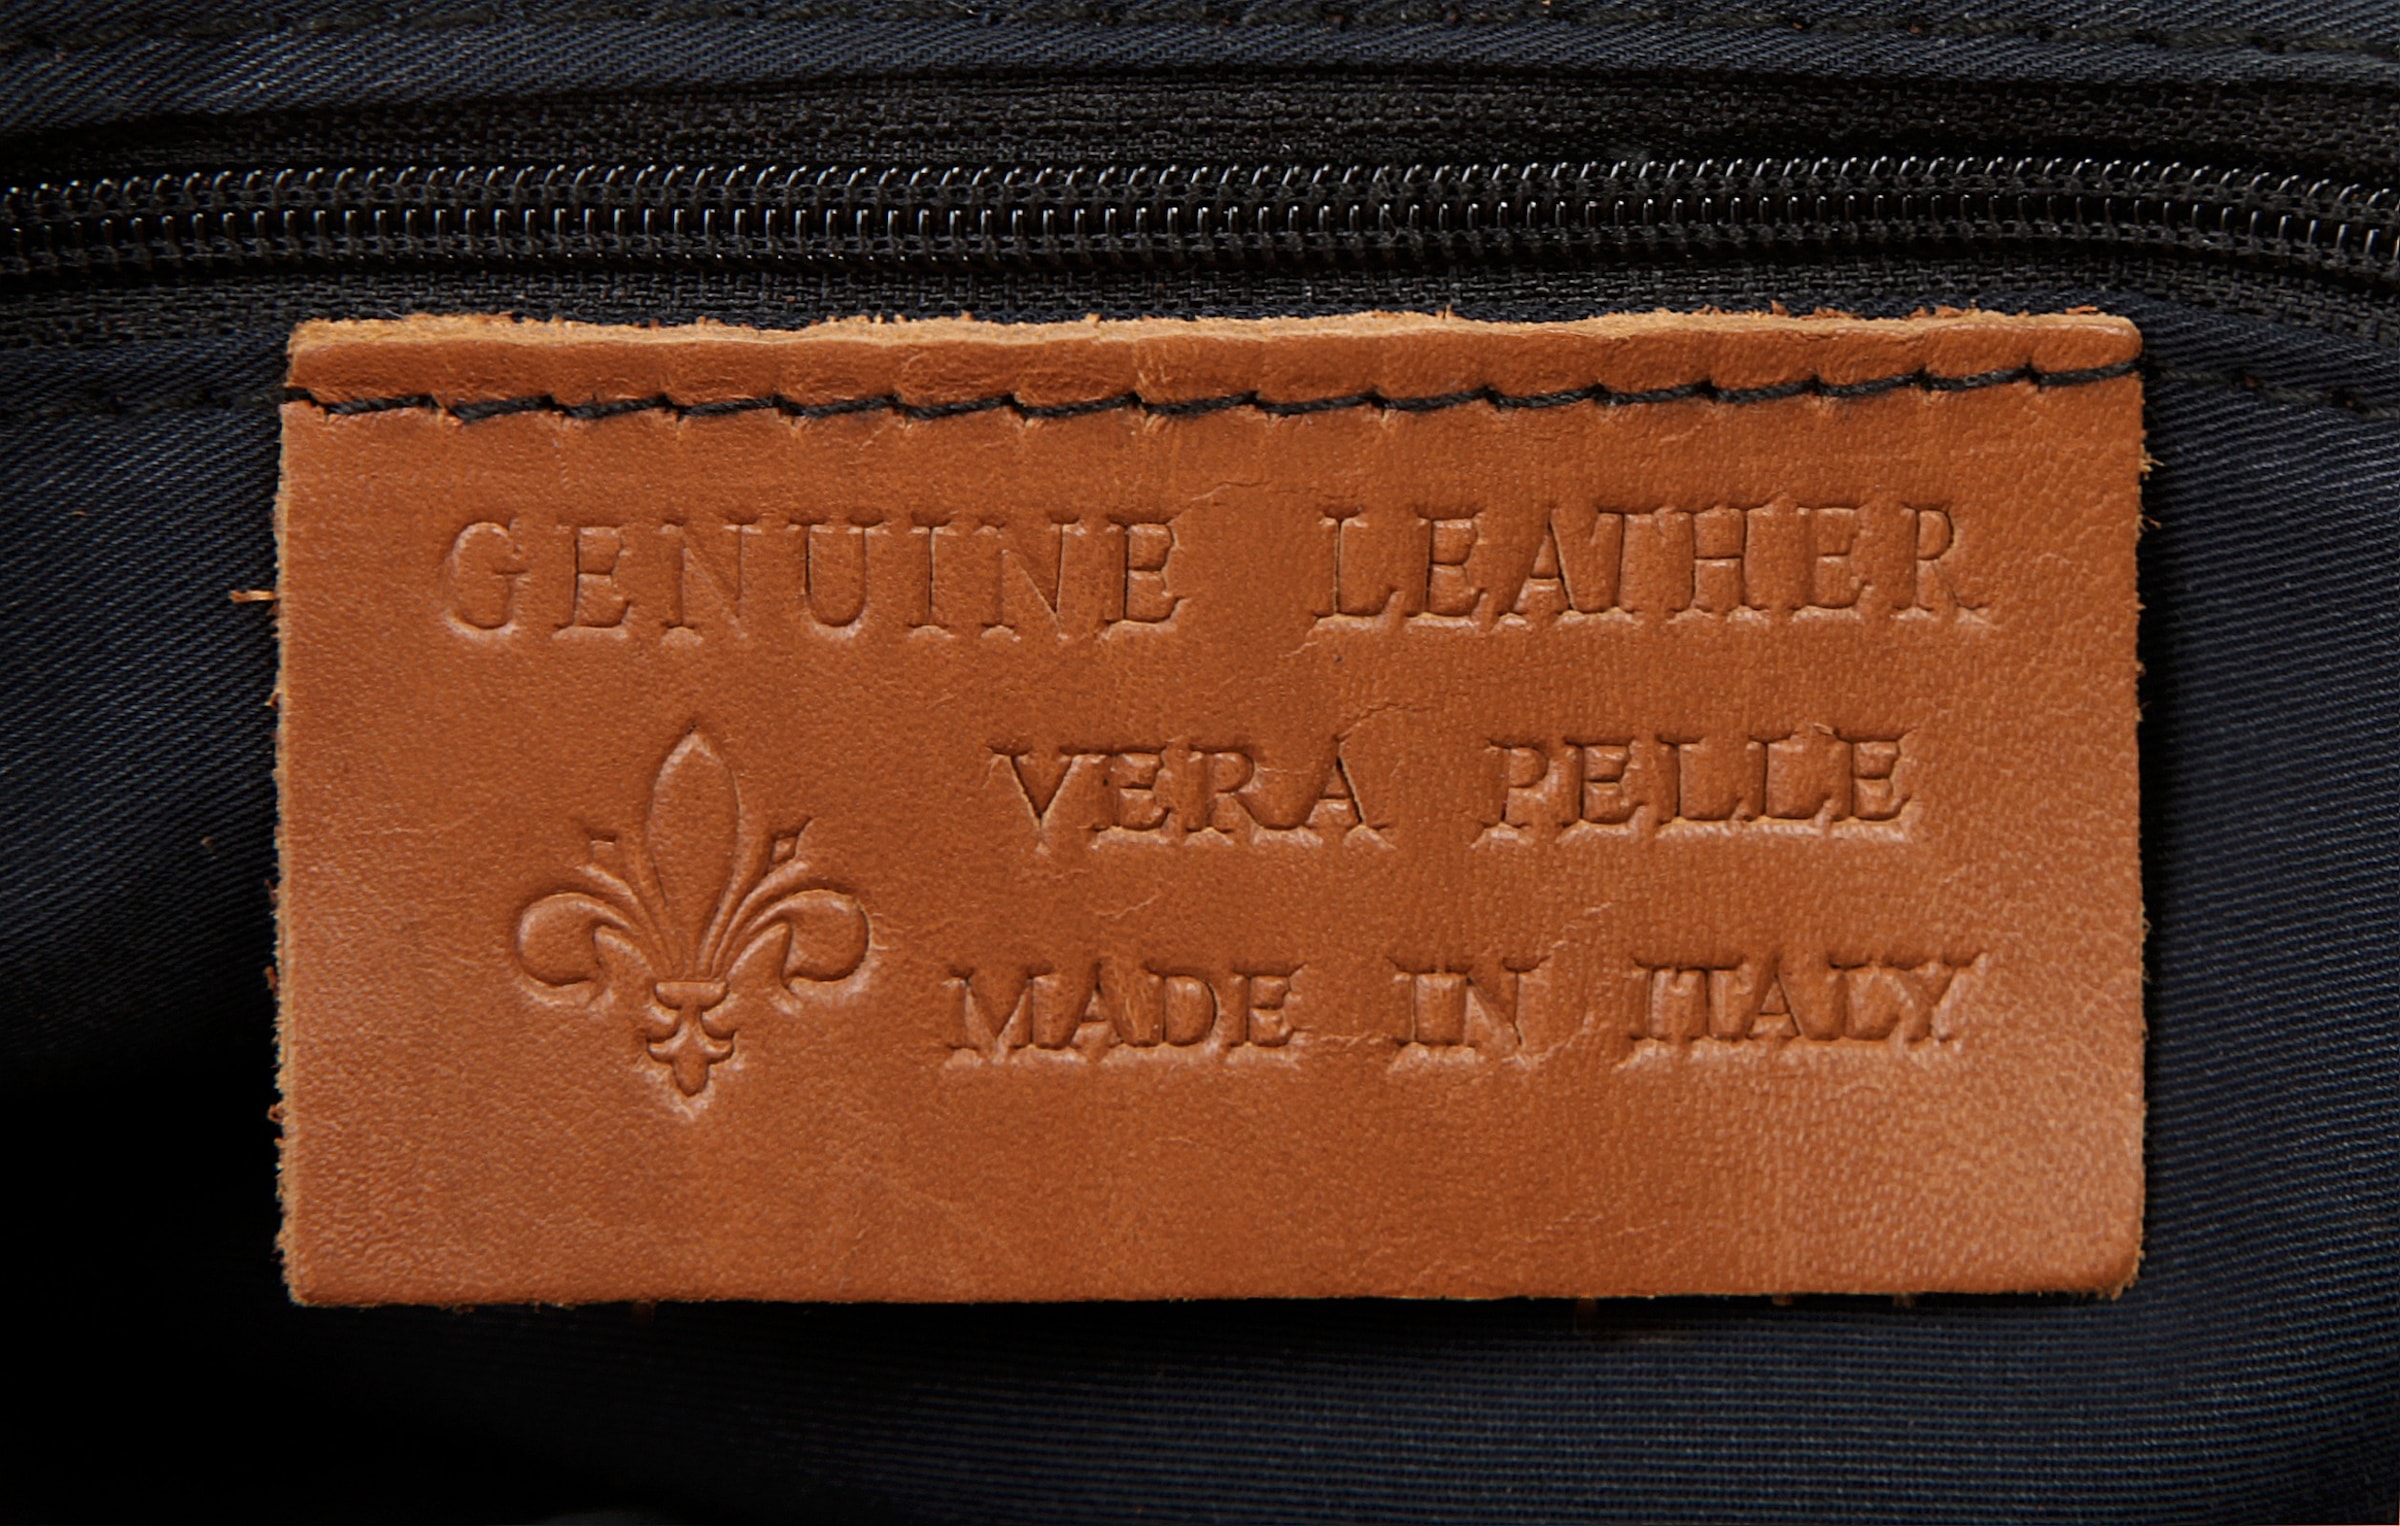 Cluty Abendtasche, echt Leder, Made in Italy